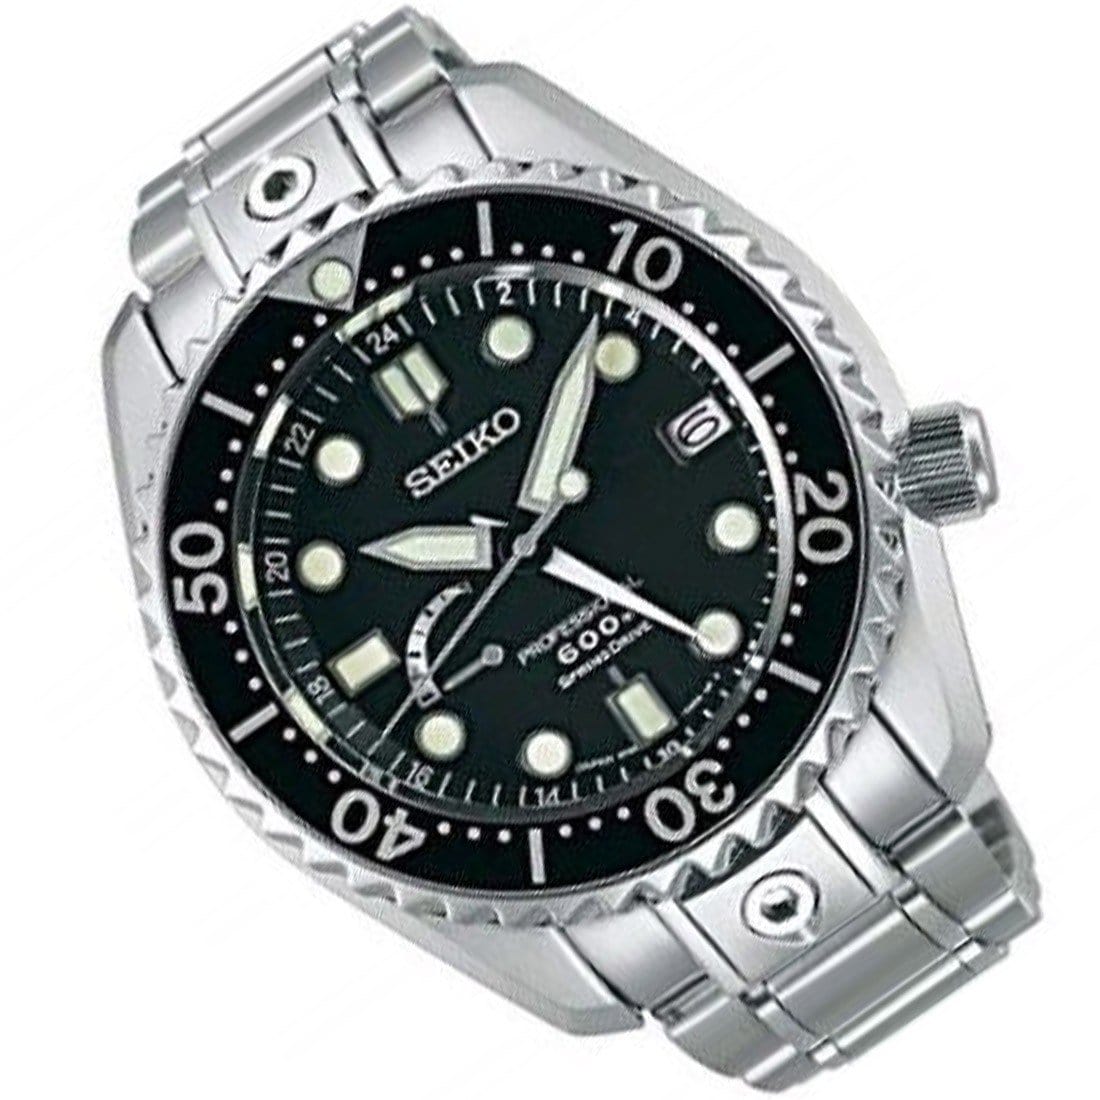 SBDB011 Seiko Prospex Professional Spring Drive 600M Analog Mens Dive Watch